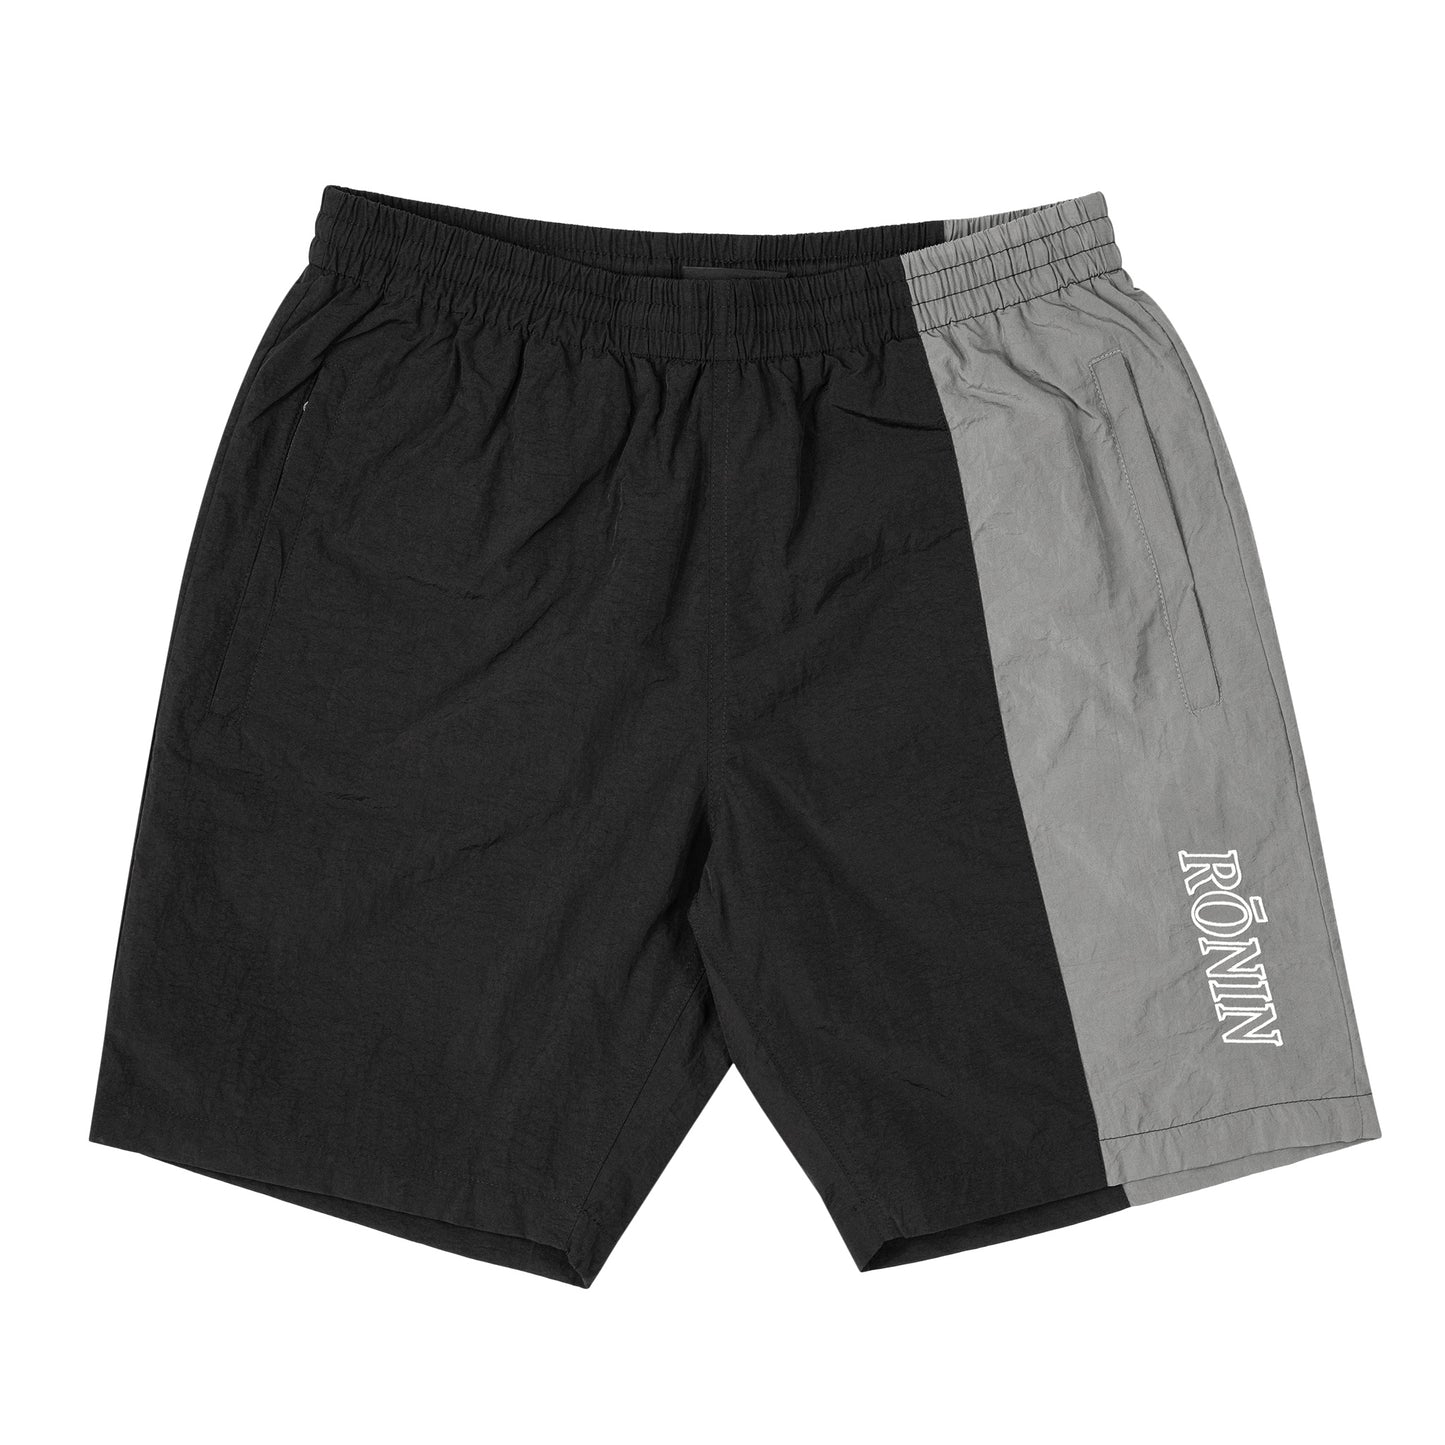 Nylon Water Shorts - Black|Grey